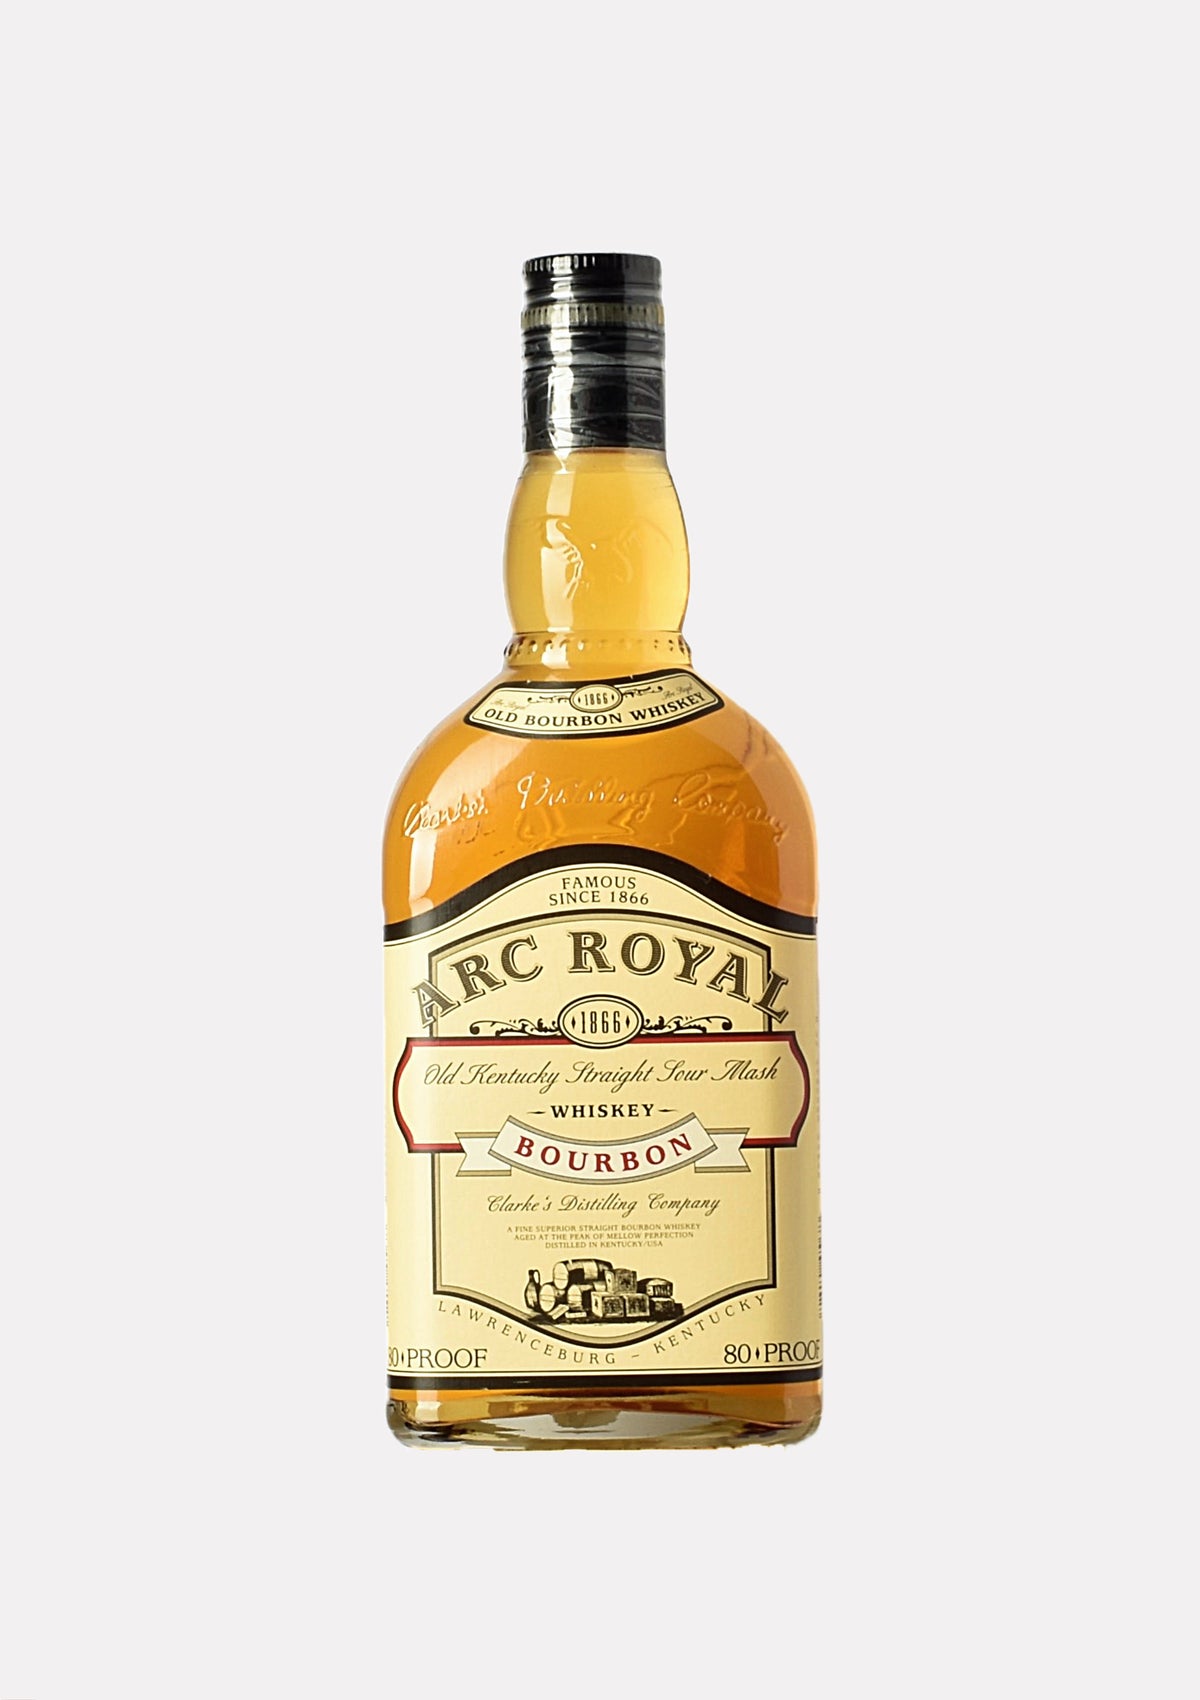 ARC ROYAL Old Kentucky Straight Sour Mash Bourbon Whiskey